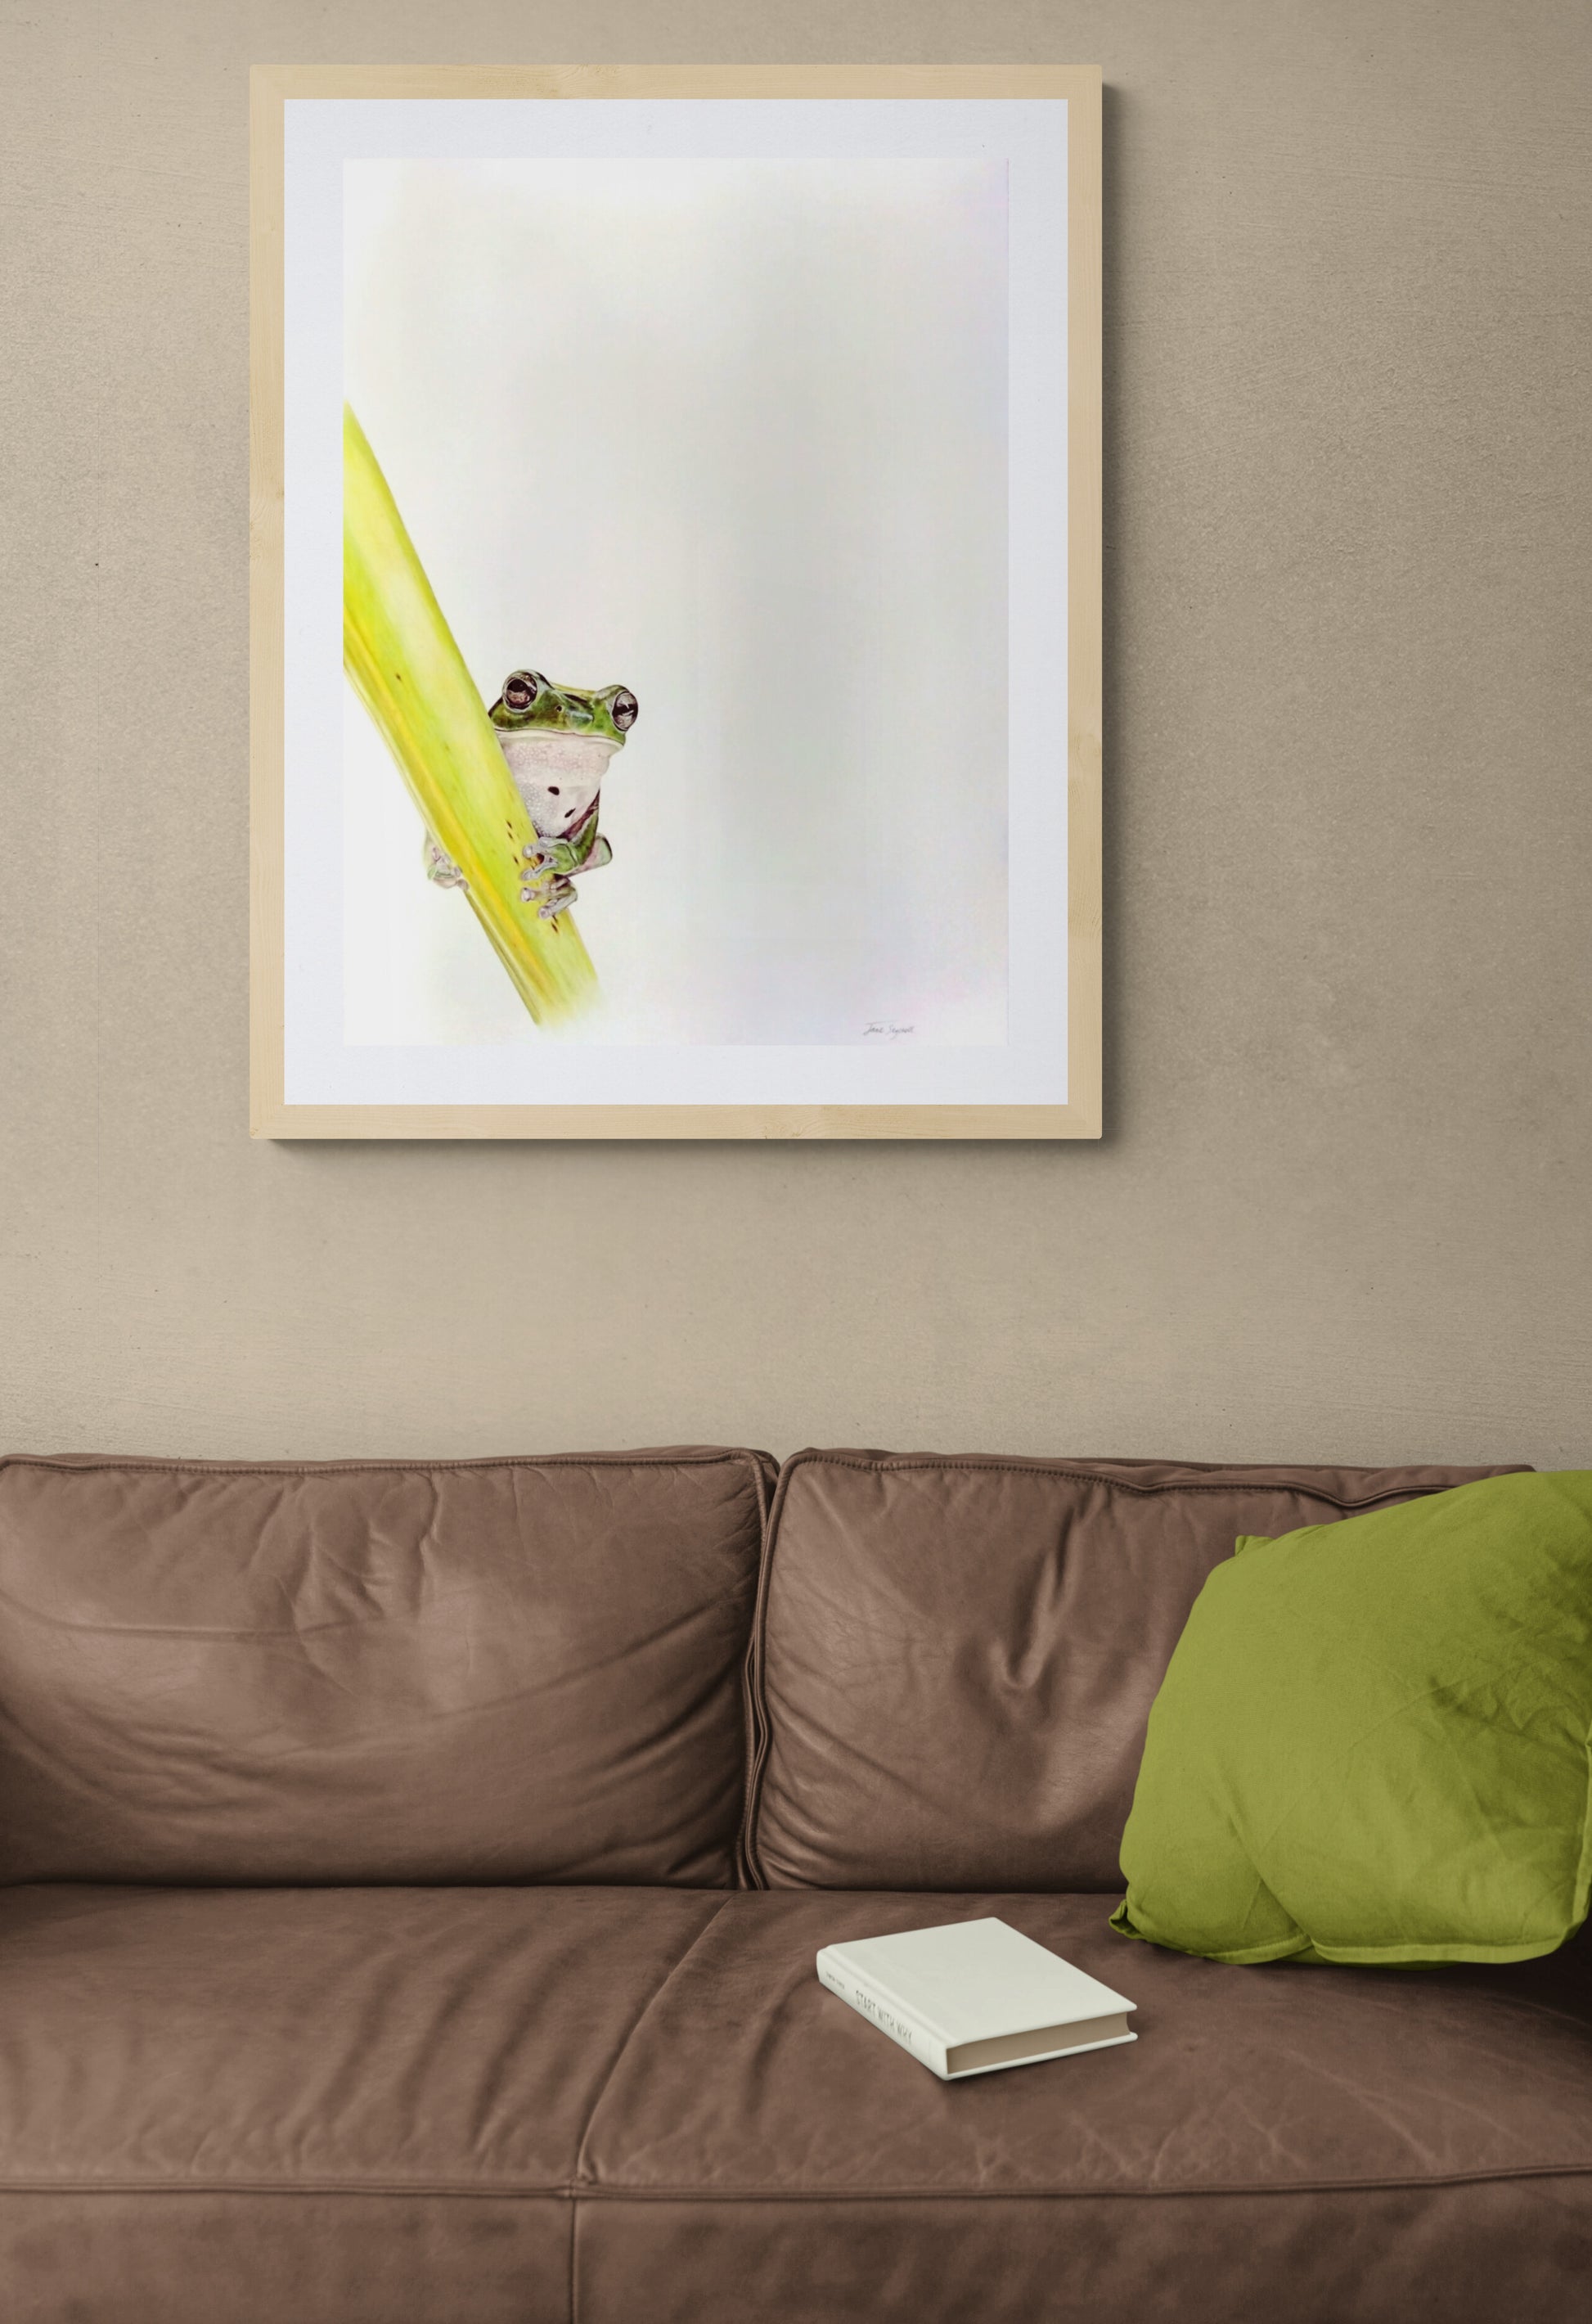 Framed artwork of a green tree frog